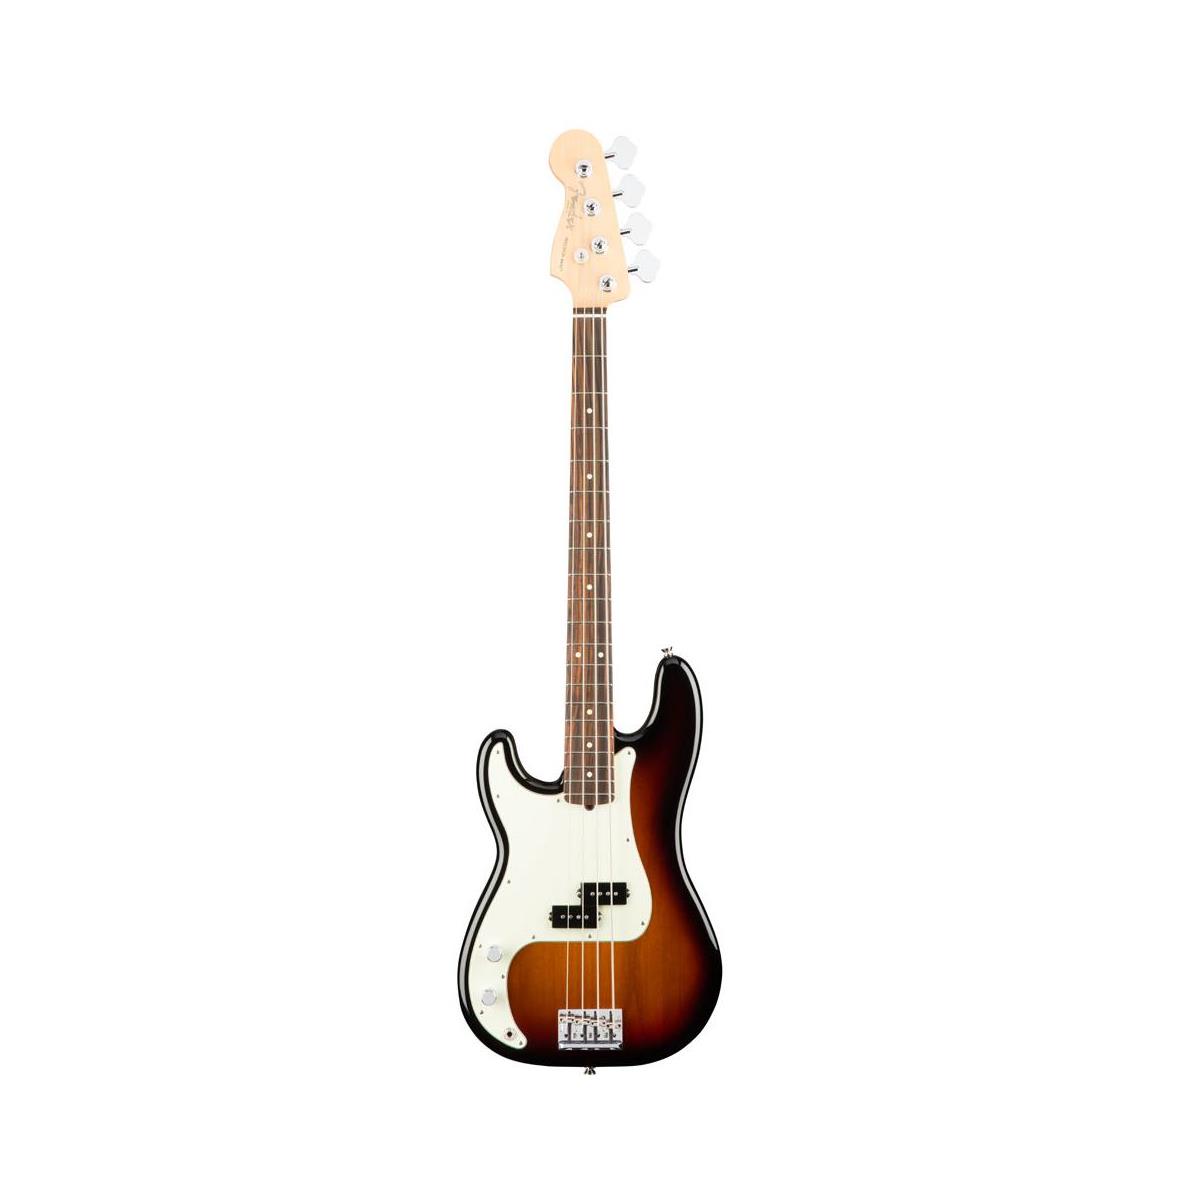 Fender American Professional Left-Handed Precision Bass Guitar (3-Color Sunburst) $949